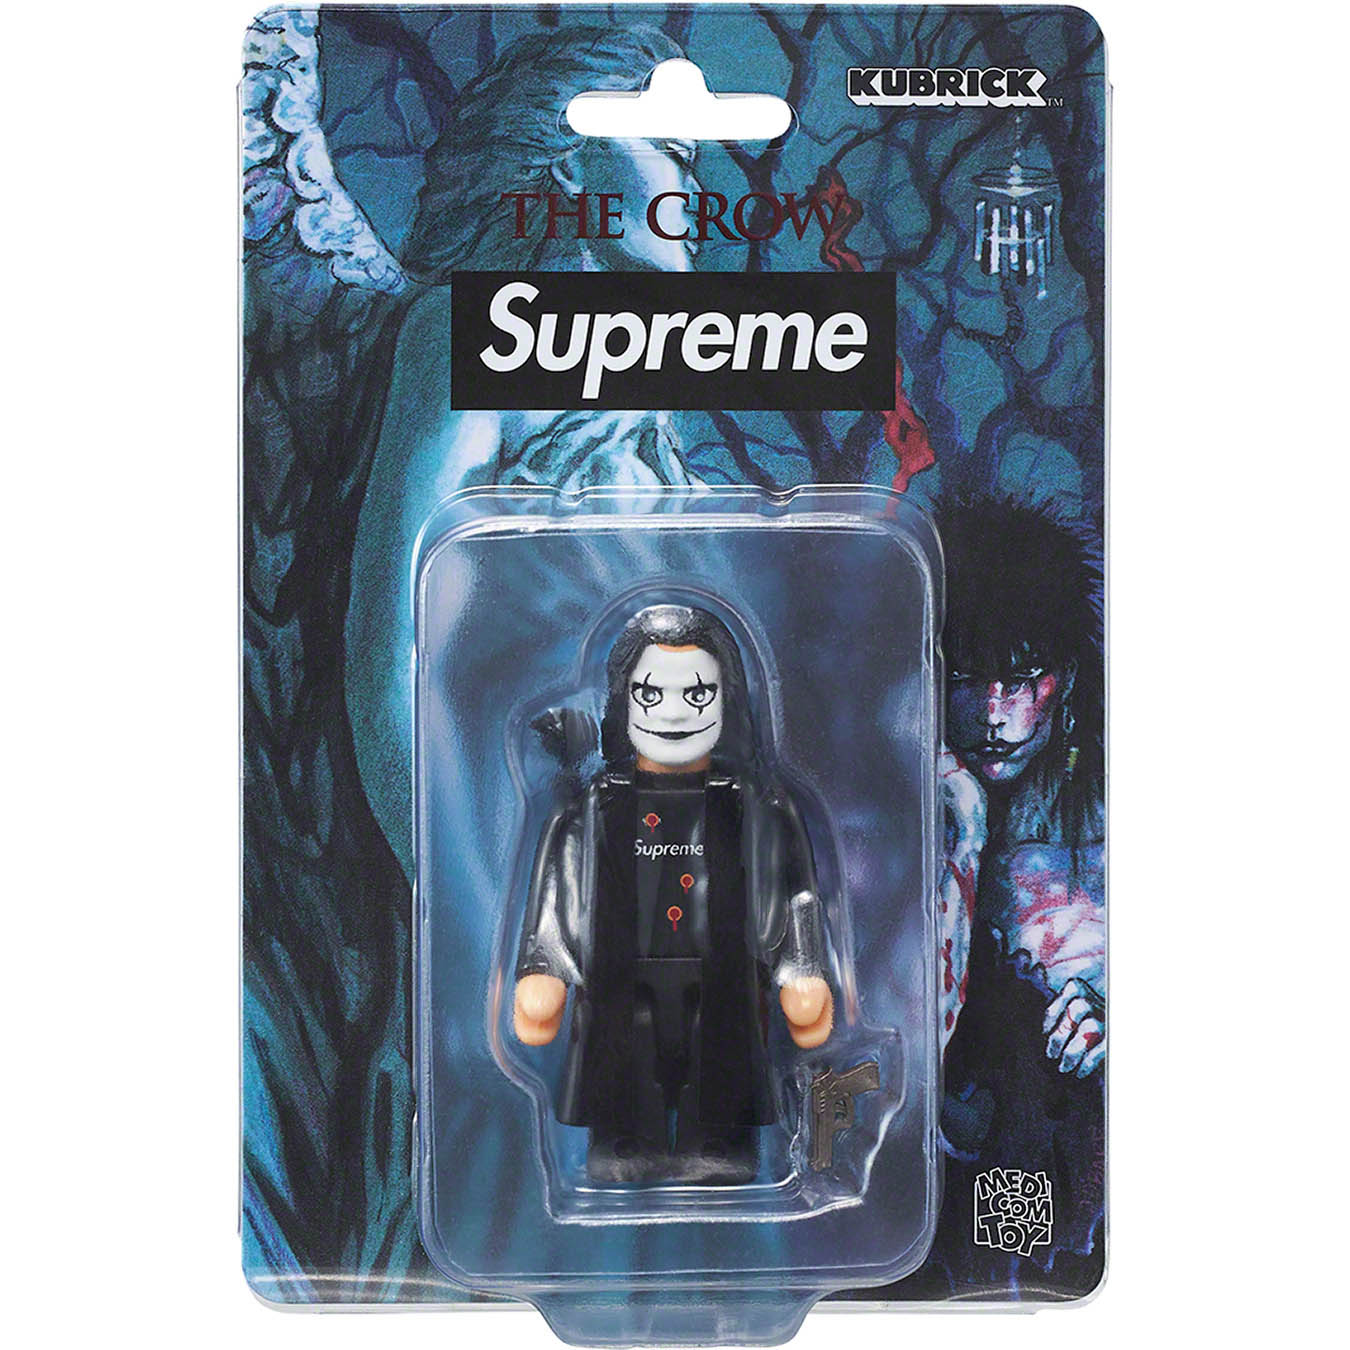 Supreme®/The Crow KUBRICK 100%